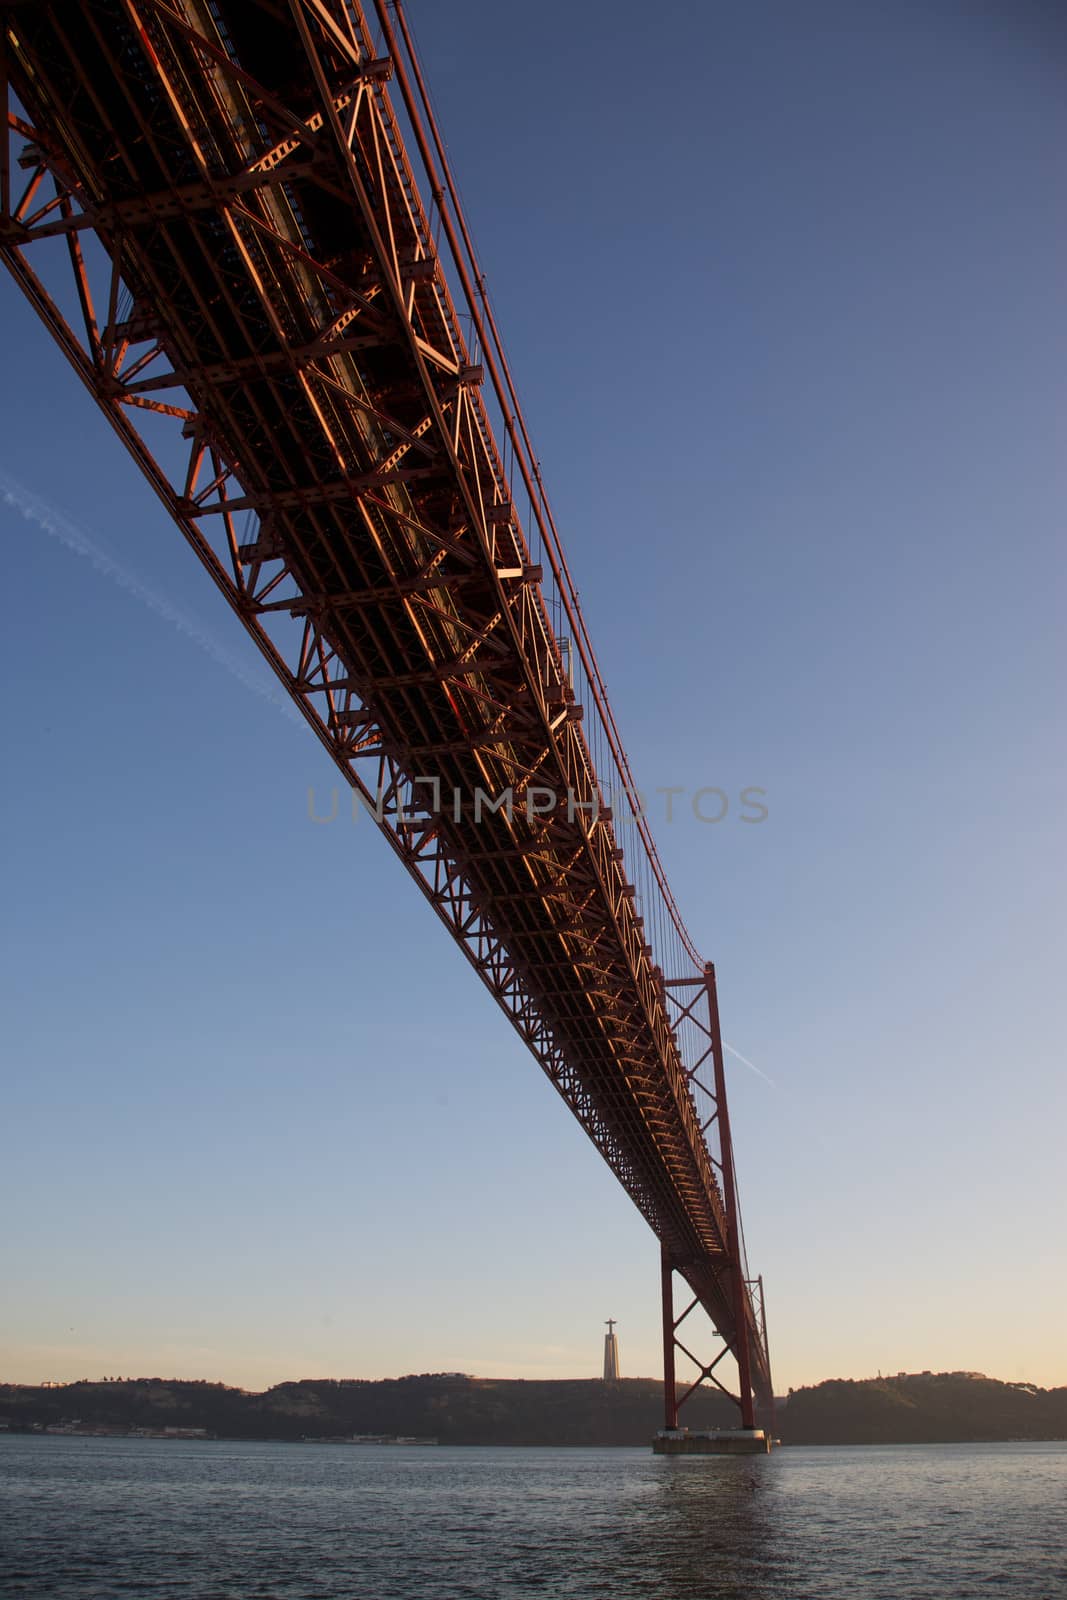 The April 25th Bridge in Lisbon, Portugal